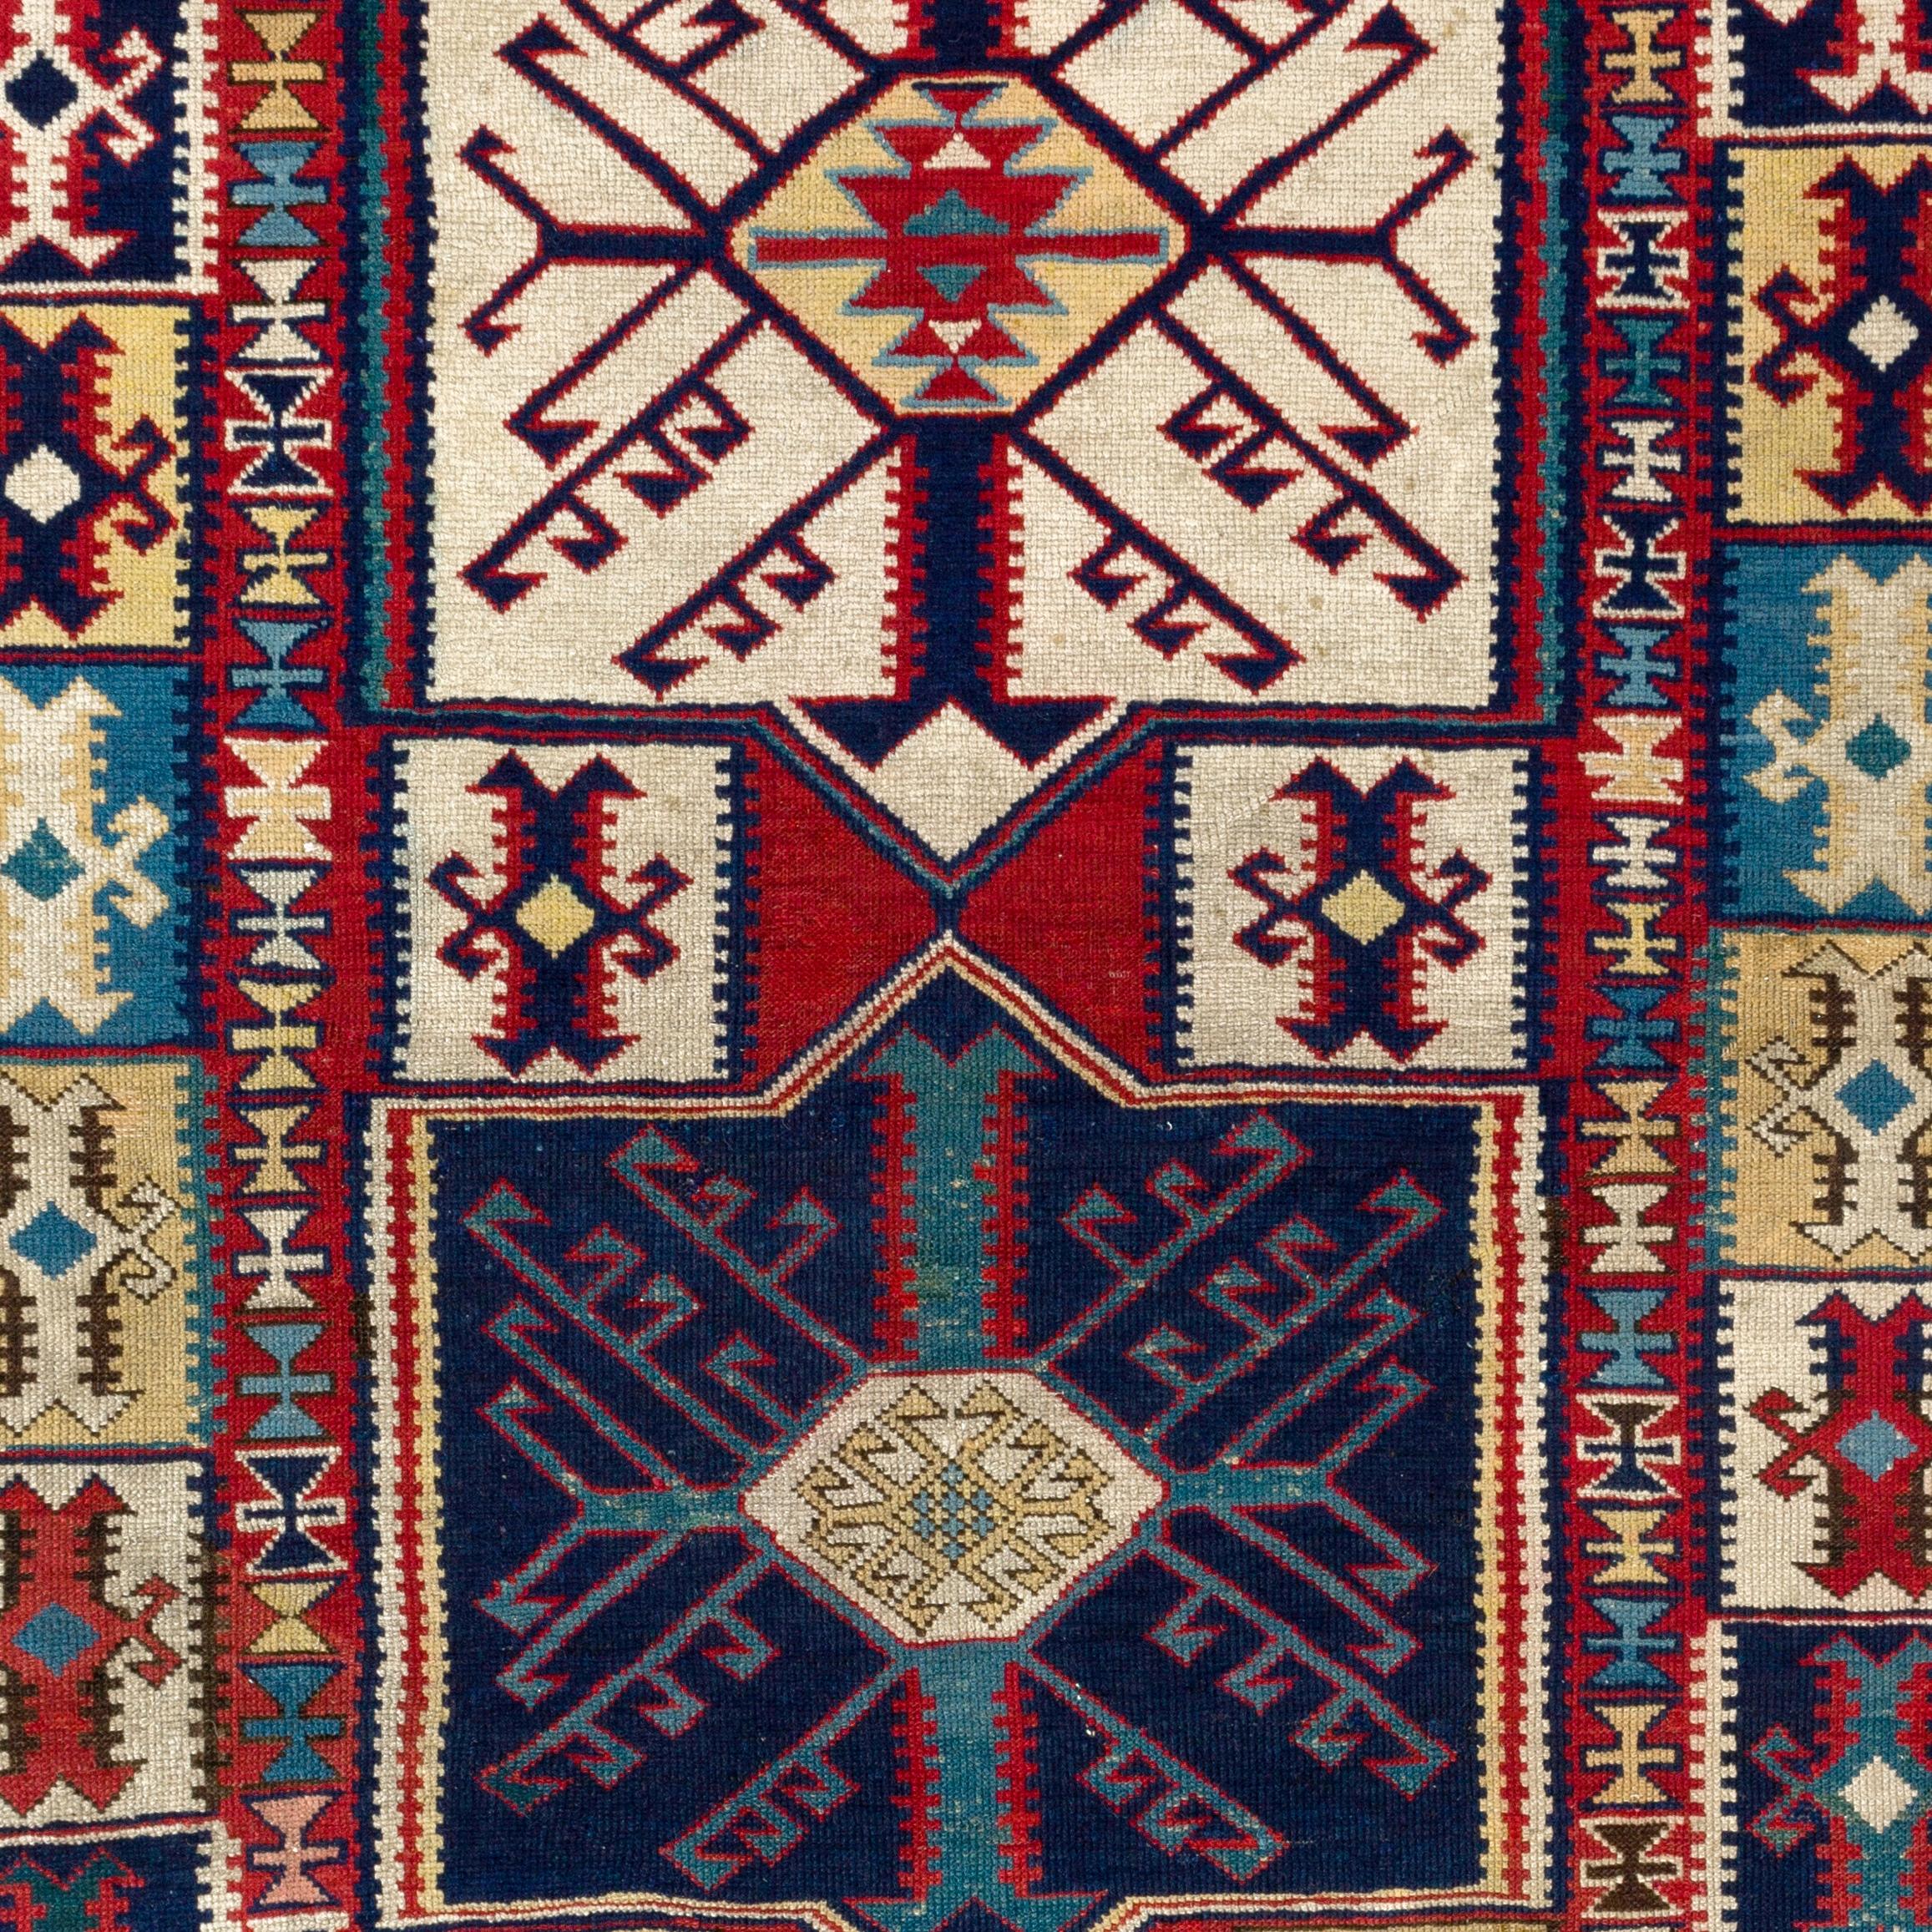 Kazak 3.7x4.8 Ft Antique Caucasian Shirvan Kuba Rug with Unusual Kilim Design For Sale